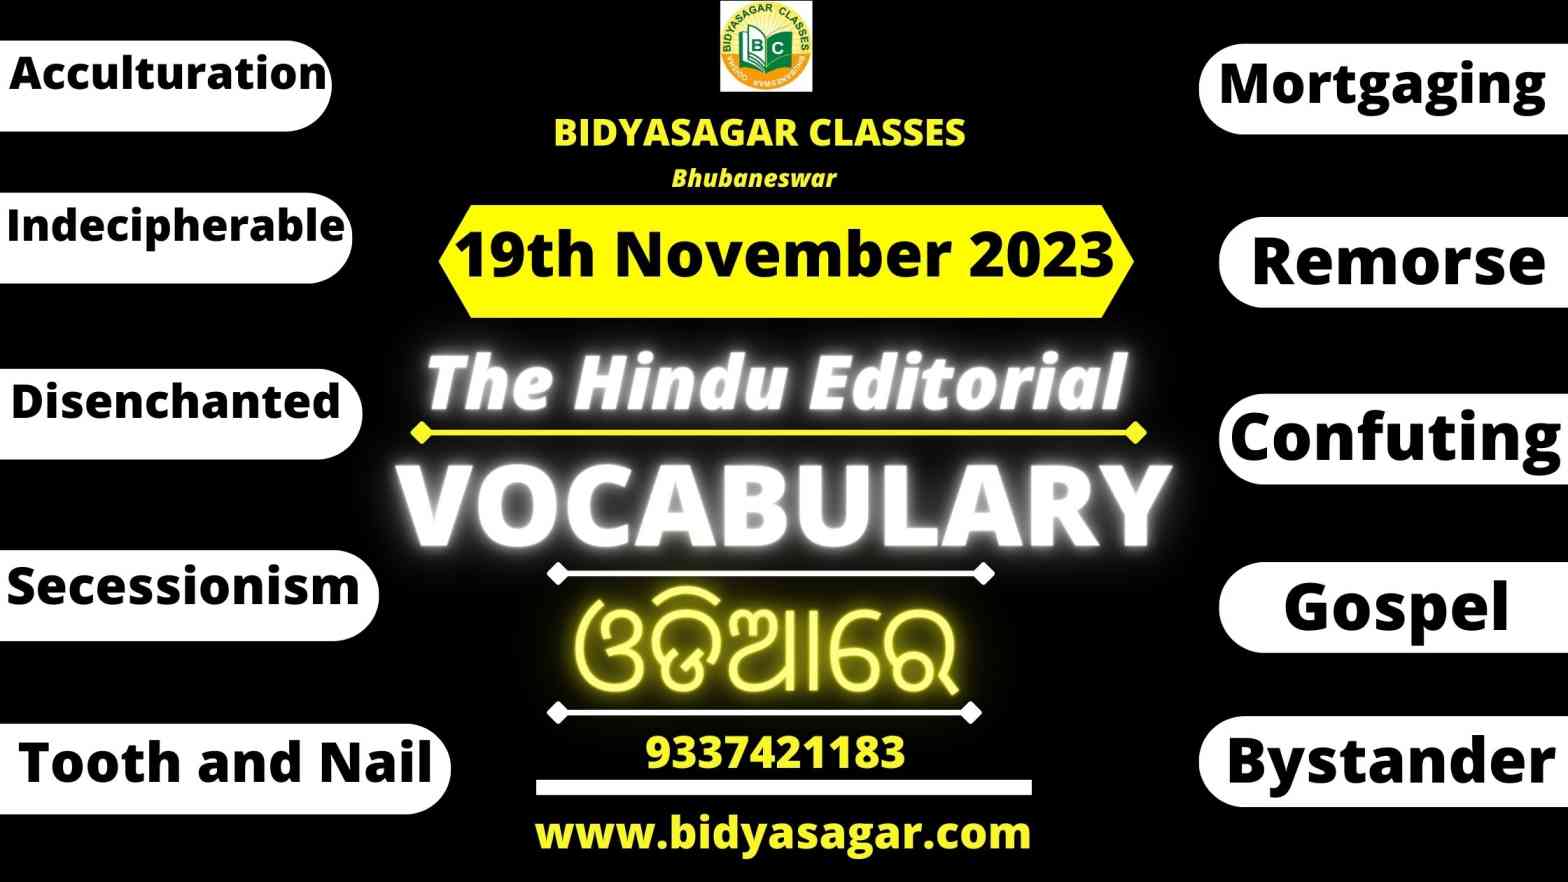 The Hindu Editorial Vocabulary of 19th November 2023